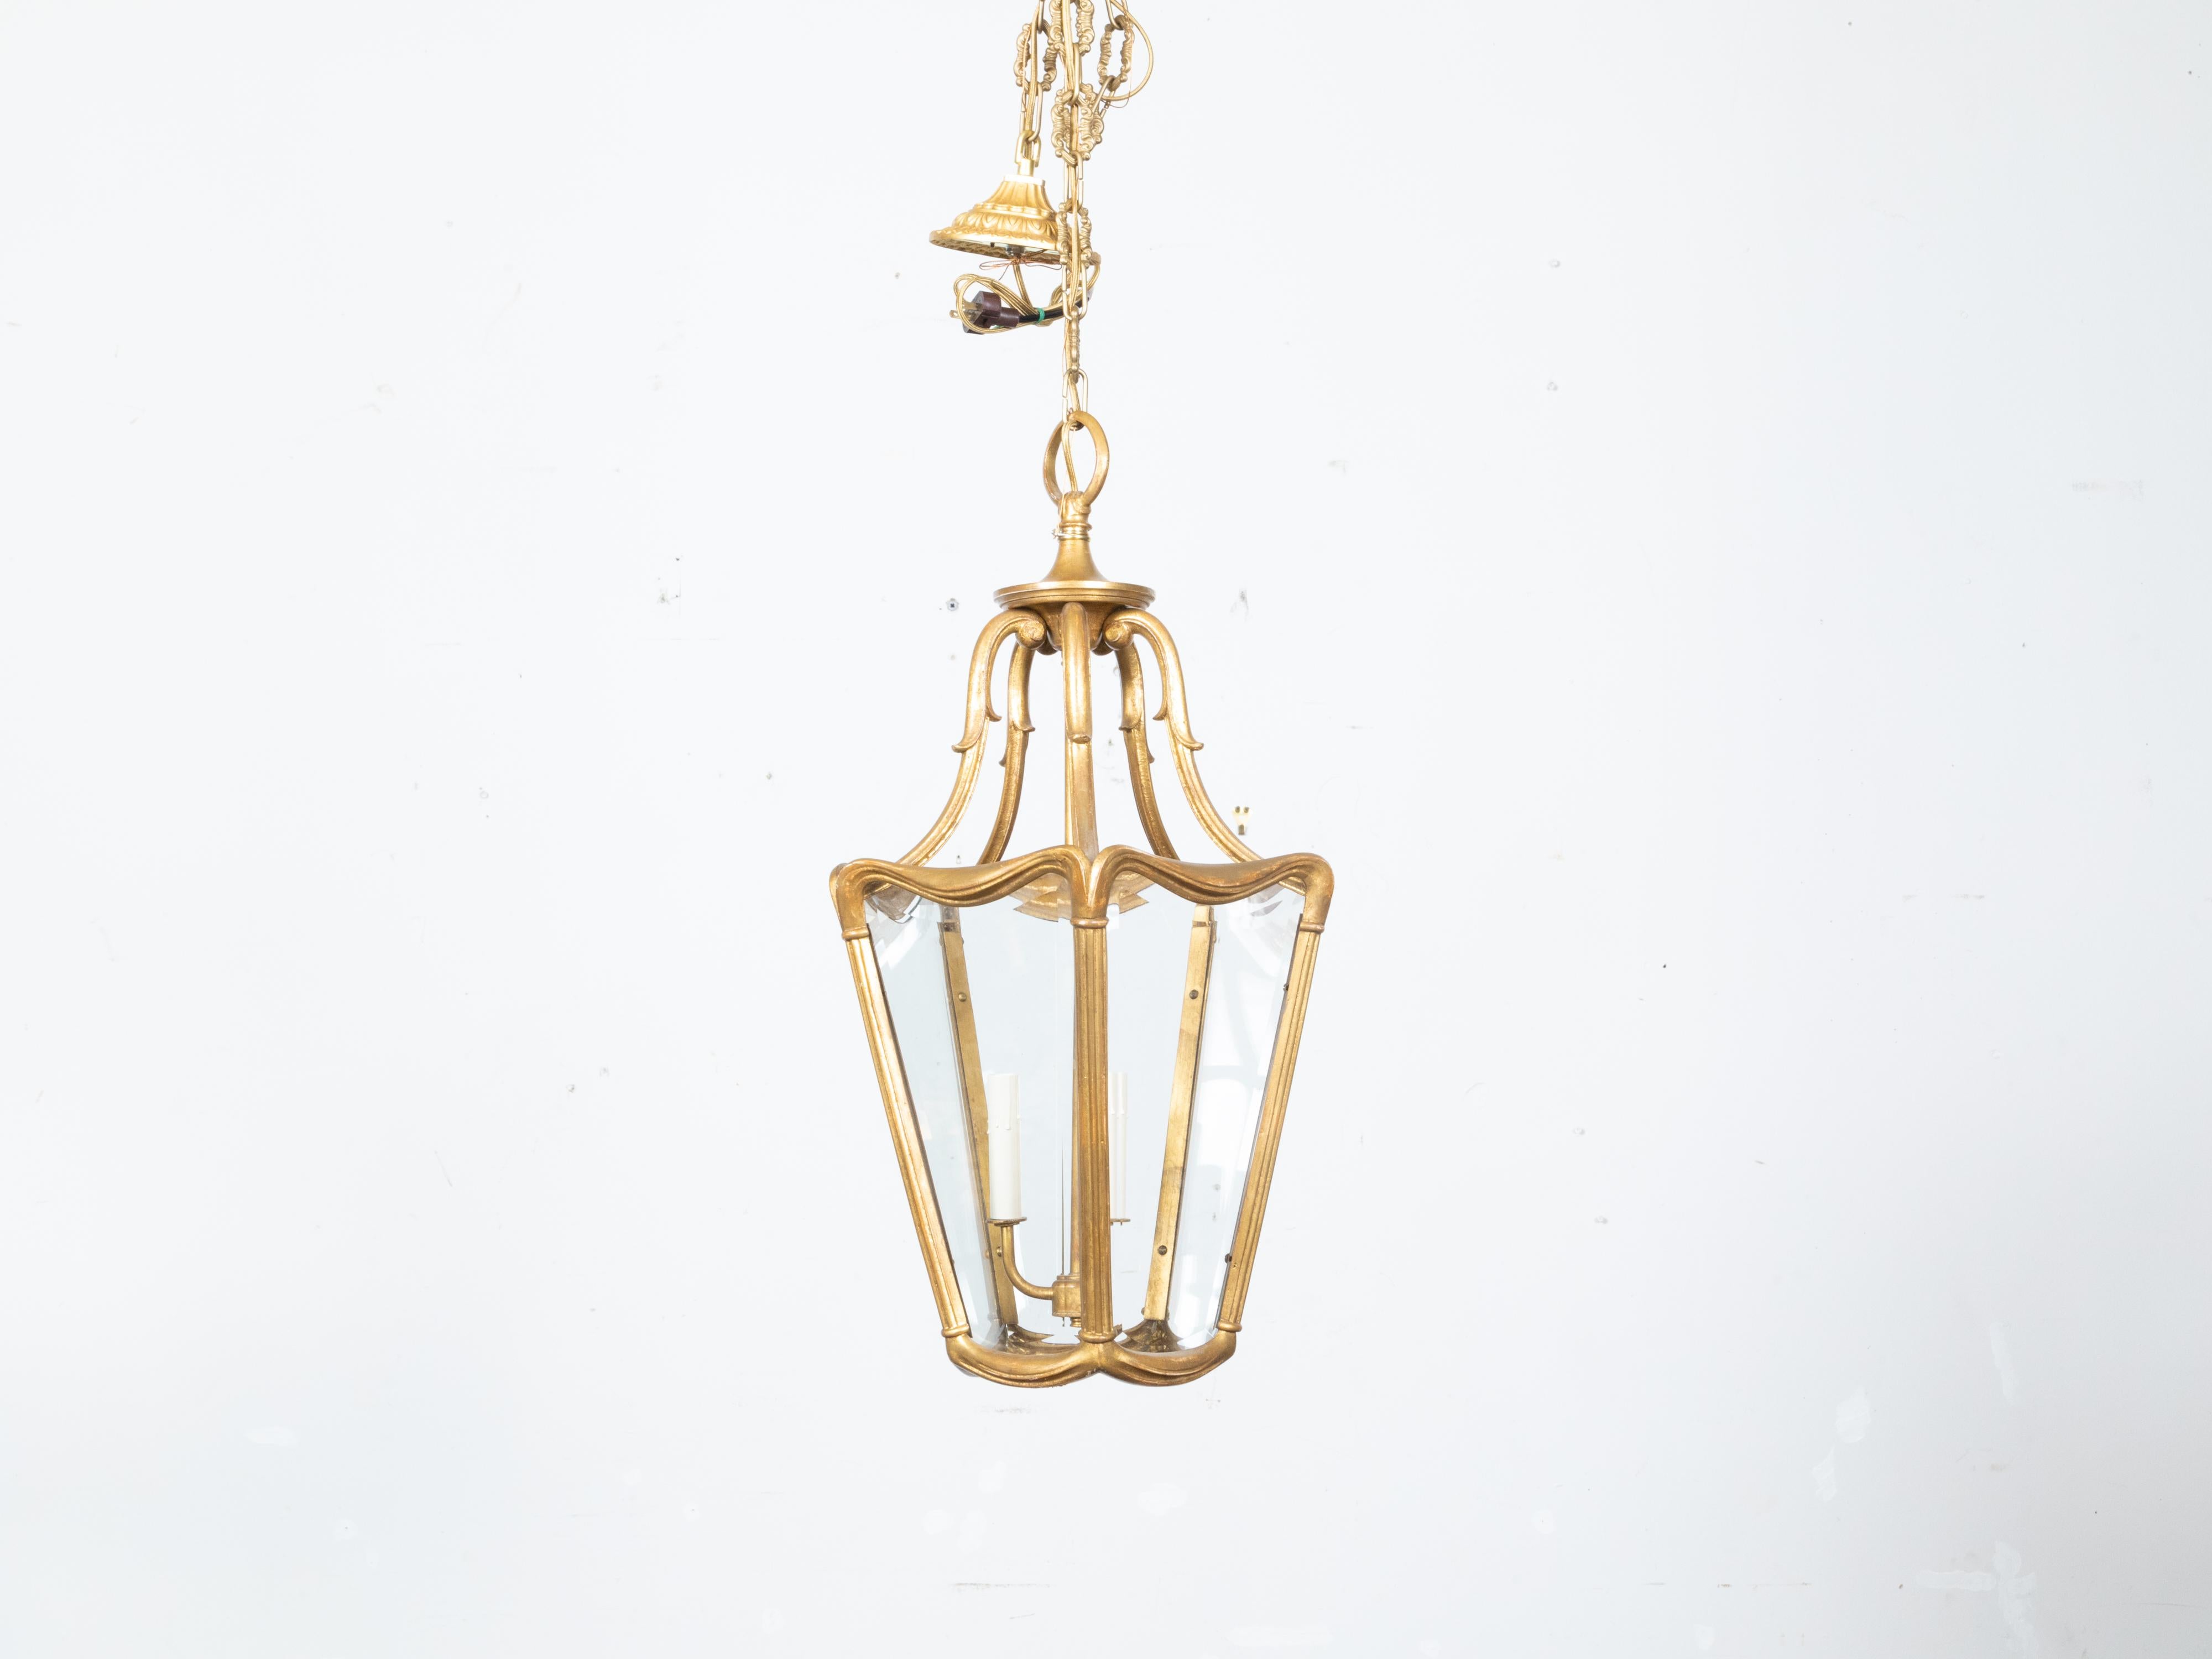 European Art Nouveau Style Gilt Metal Three-Light Lantern with Subtle Scrolling Effects For Sale